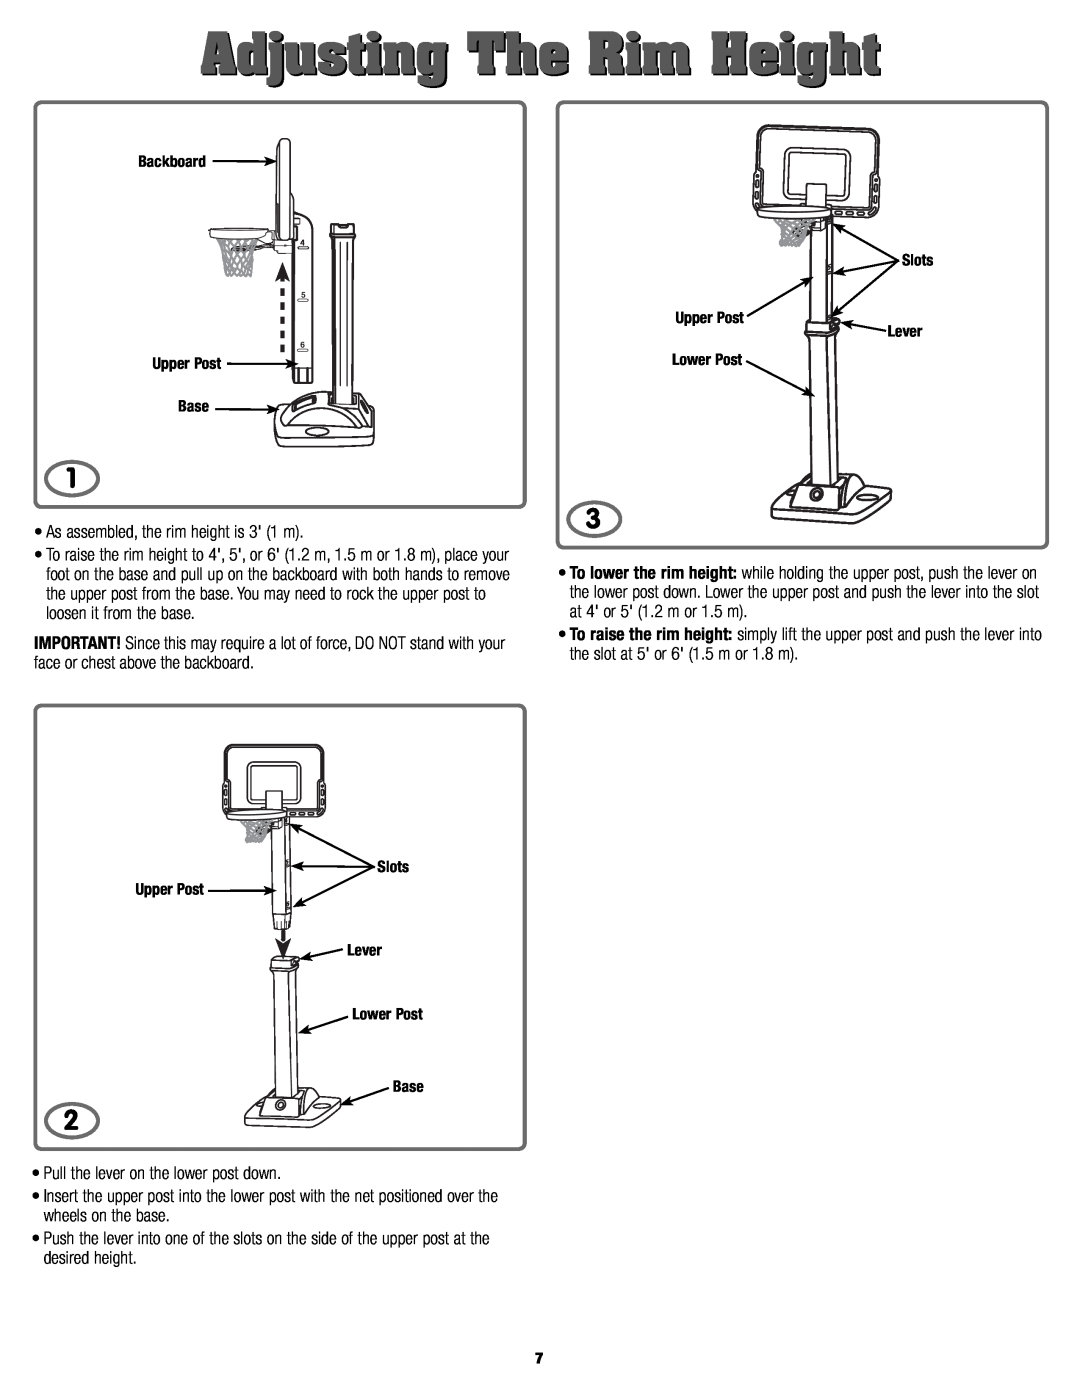 Fisher-Price K9125 manual Adjusting The Rim Height 